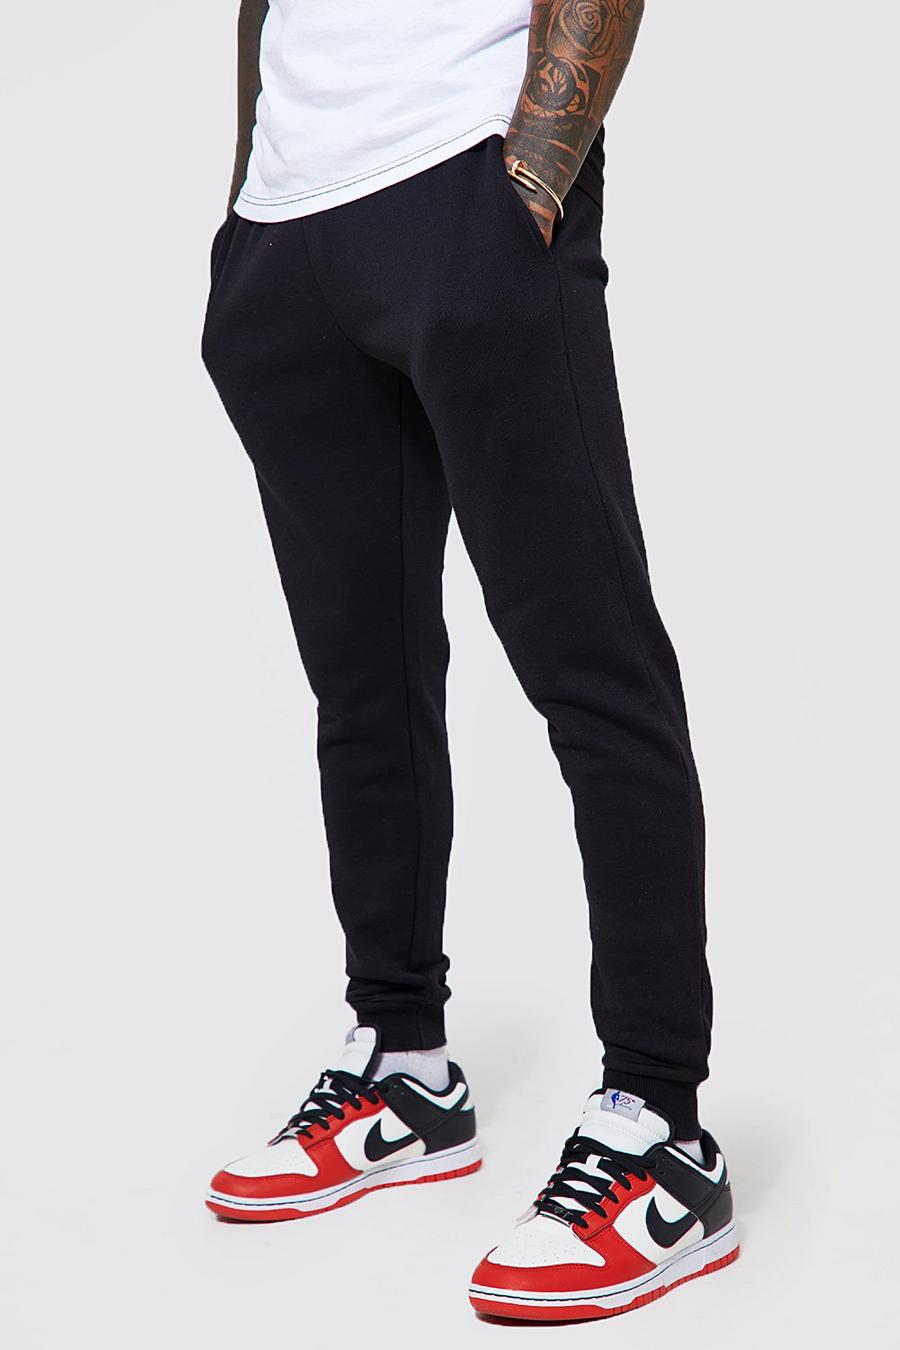 Pantaloni tuta Basic Skinny Fit in cotone REEL, Black negro